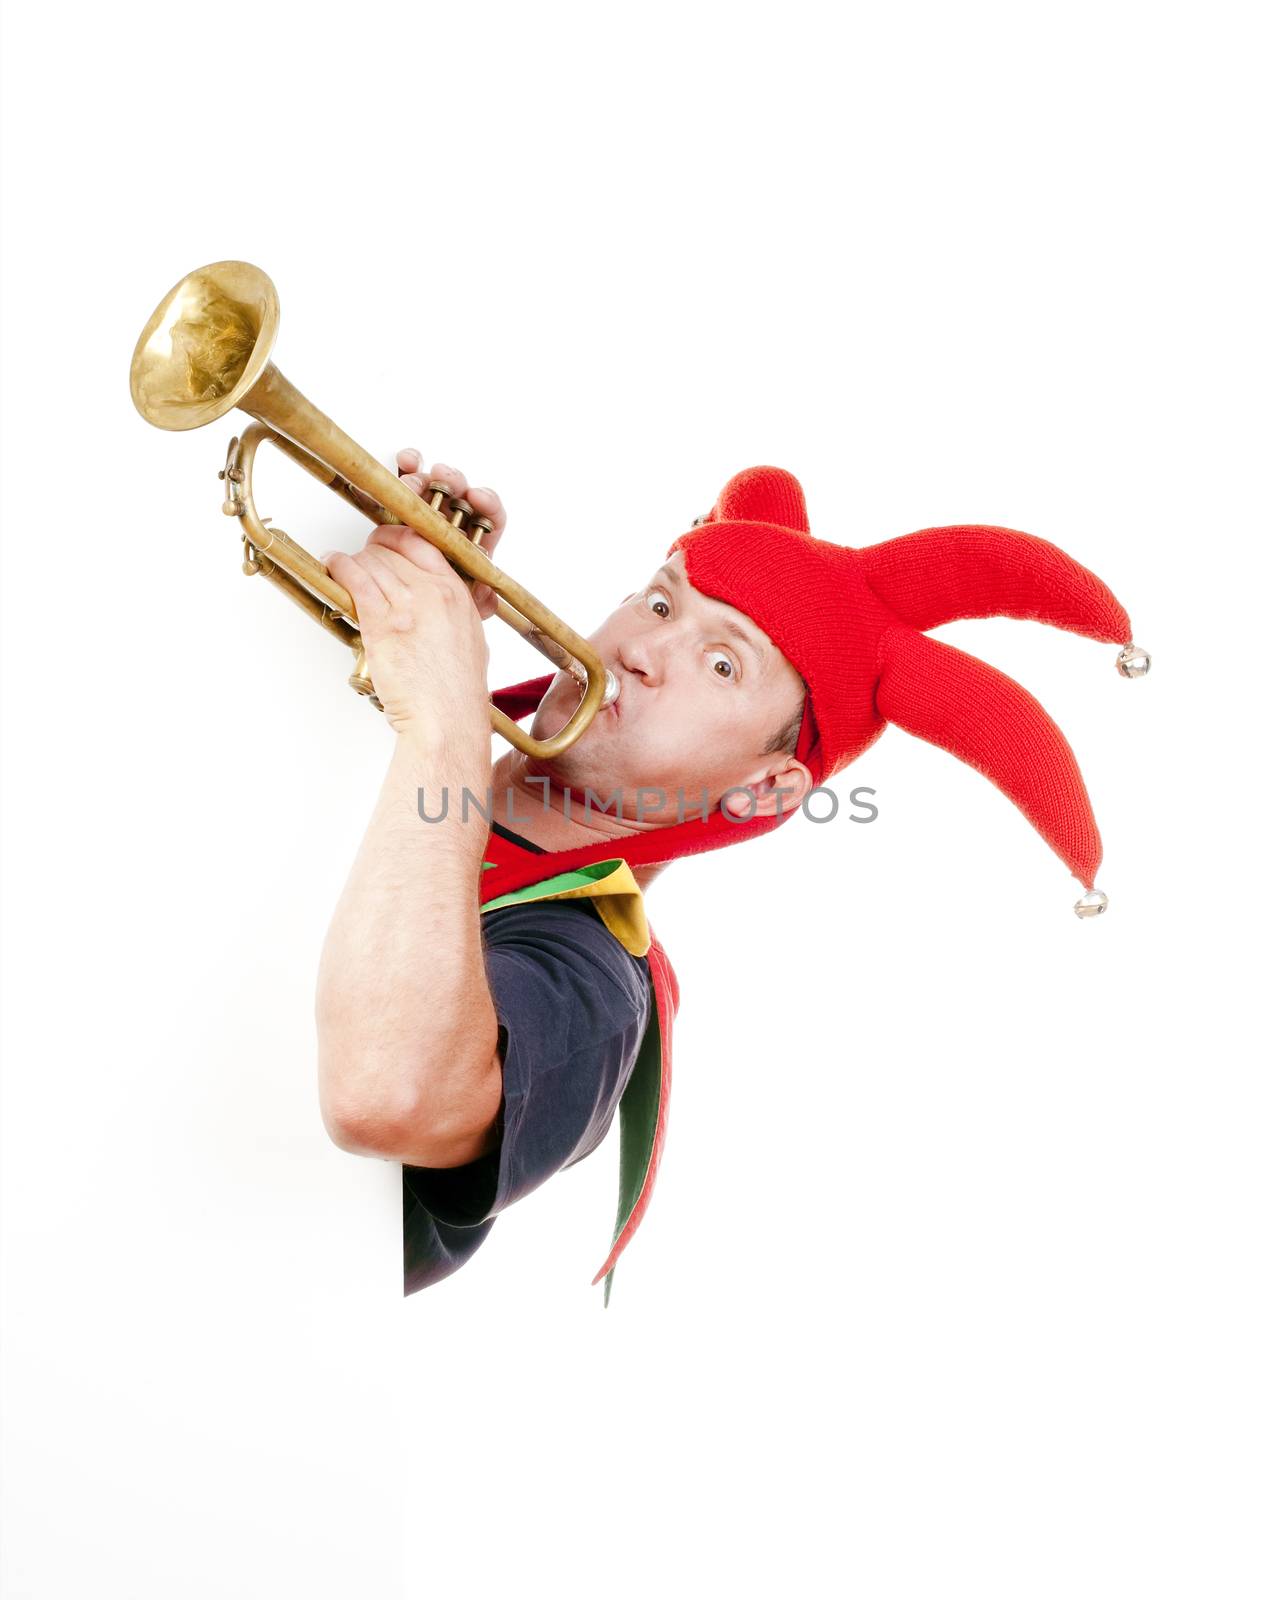 jester blowing trumpet by courtyardpix